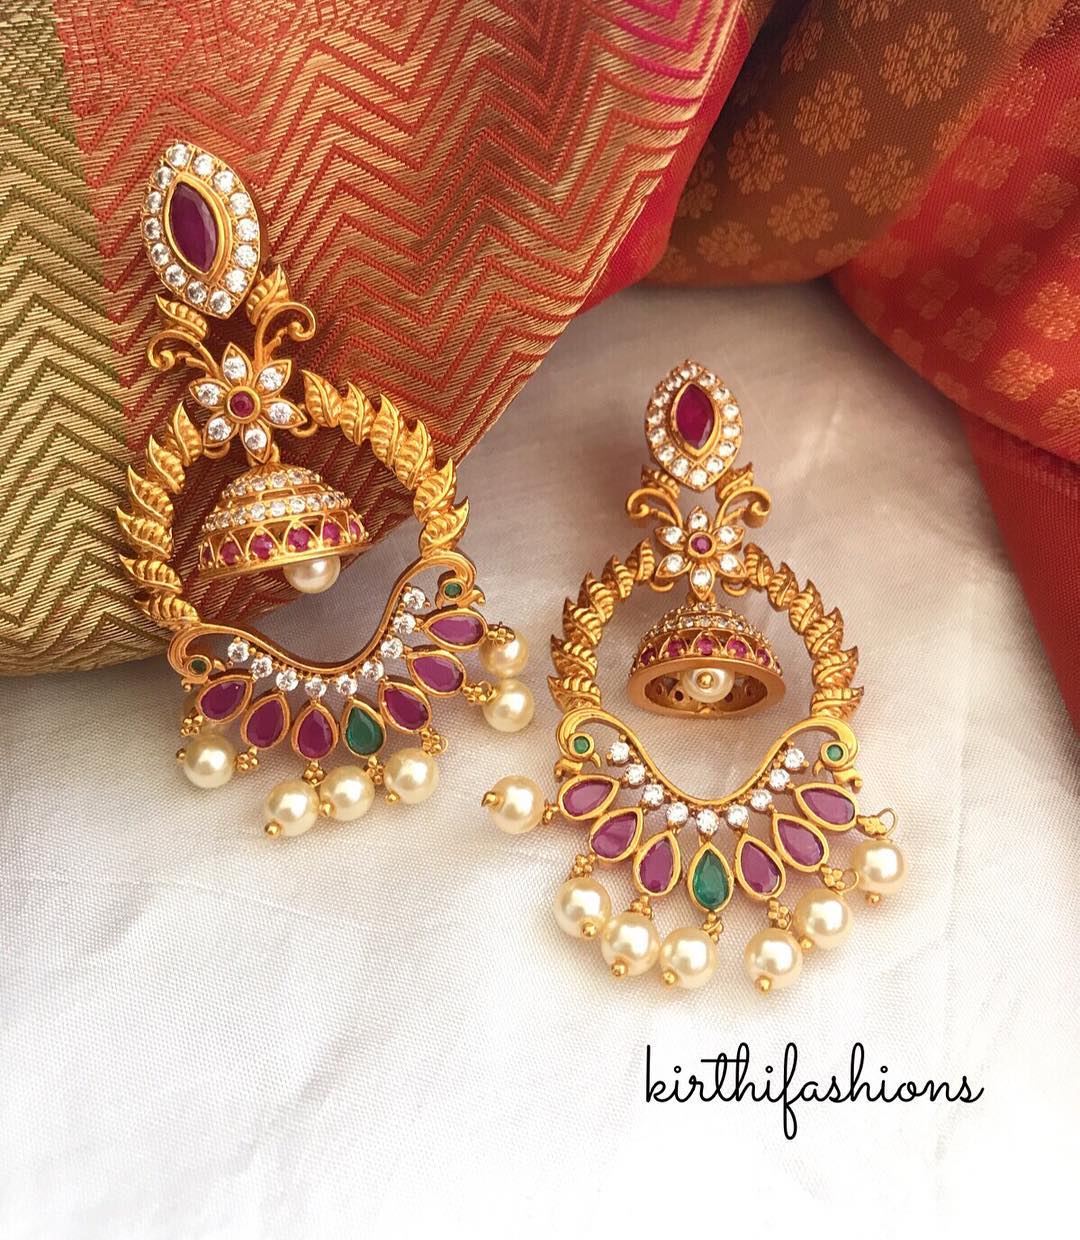 Pretty Earring From Kirthi Fashions